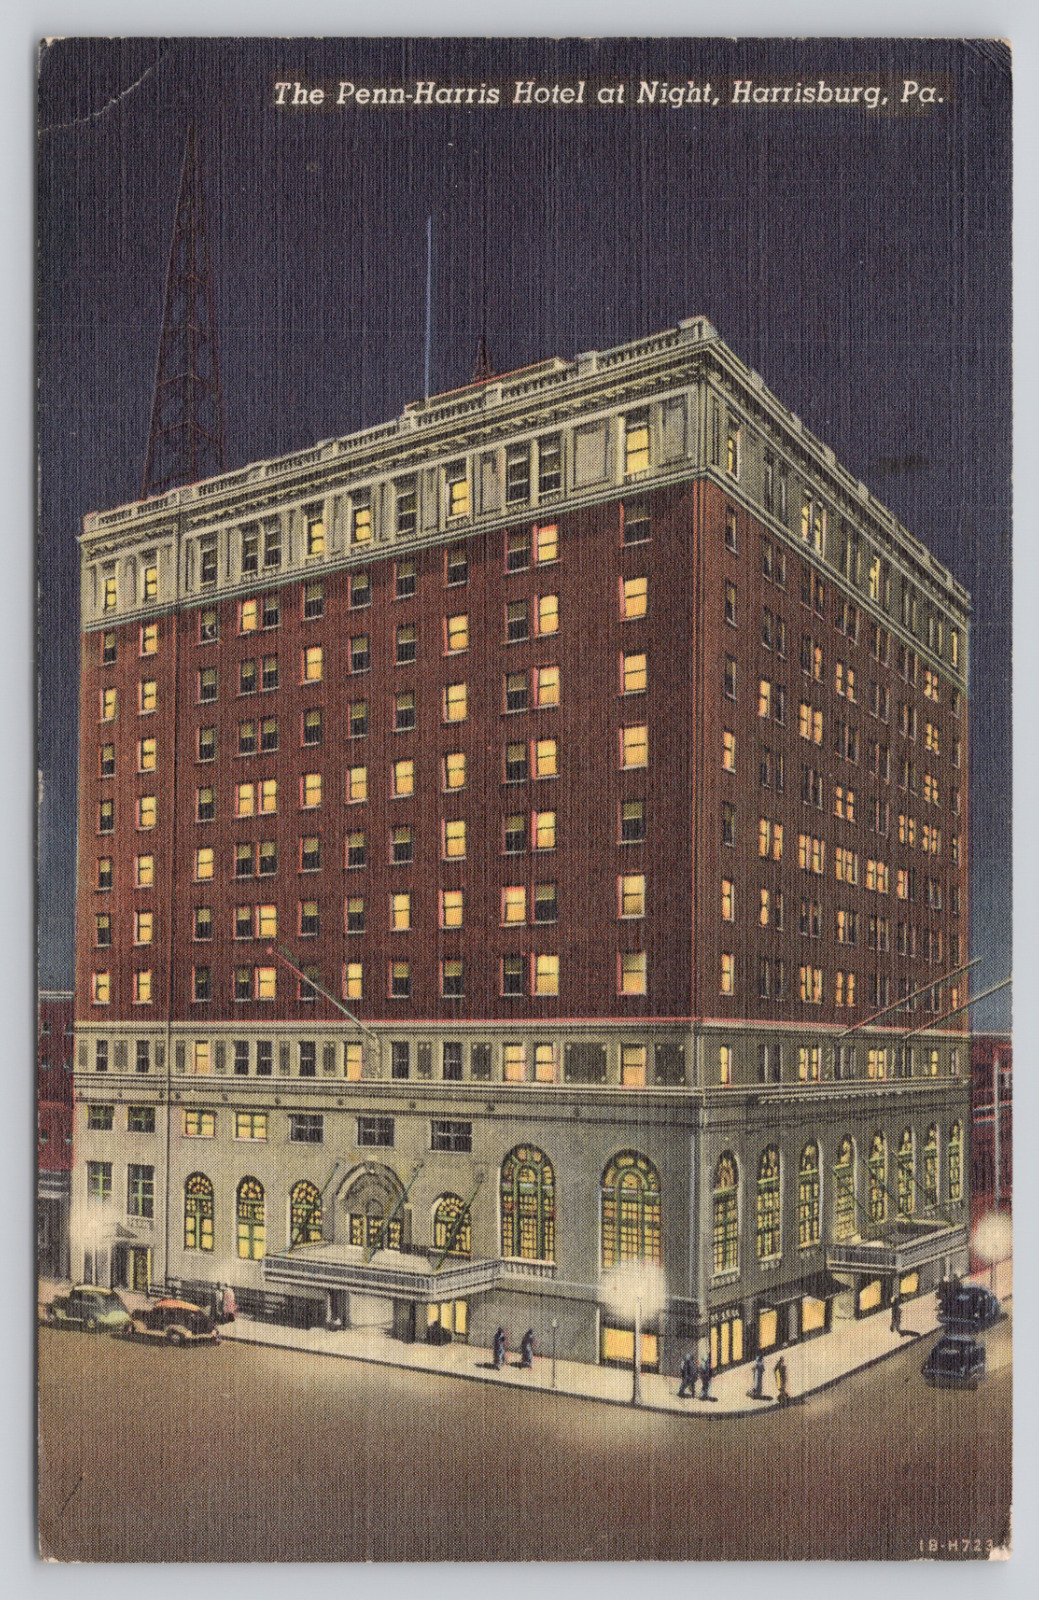 Penn-Harris Hotel at Night, Harrisburg, Strawberry Square, PA c1944 Postcard